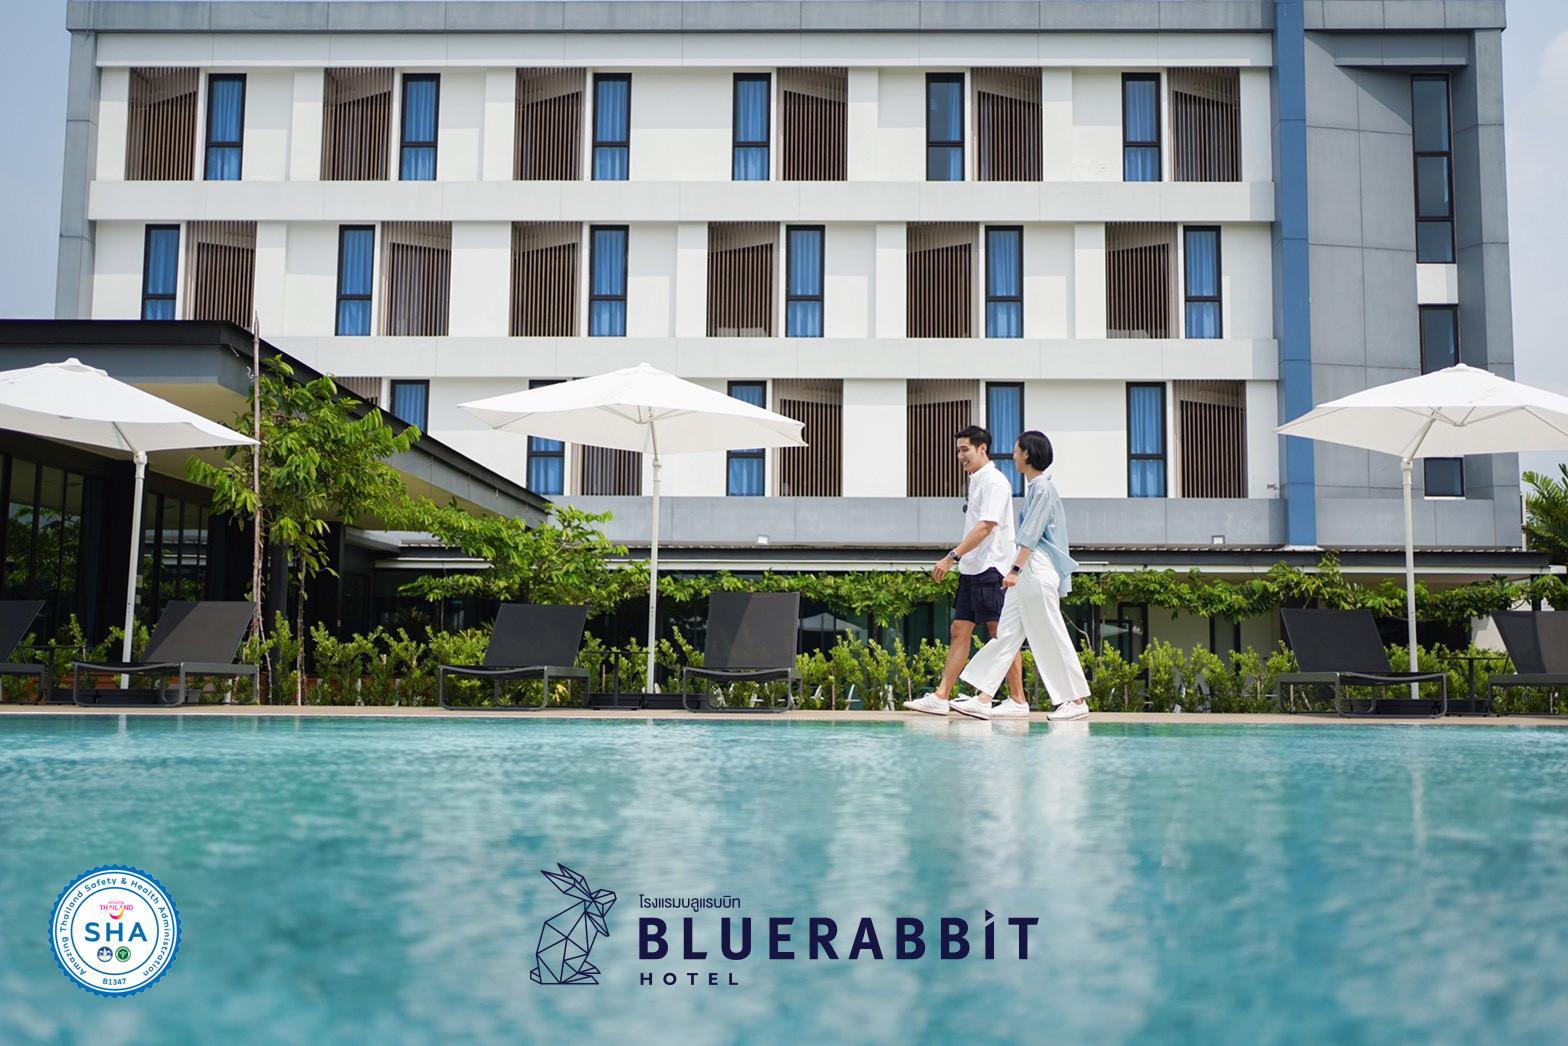 Blue rabbit hotel image